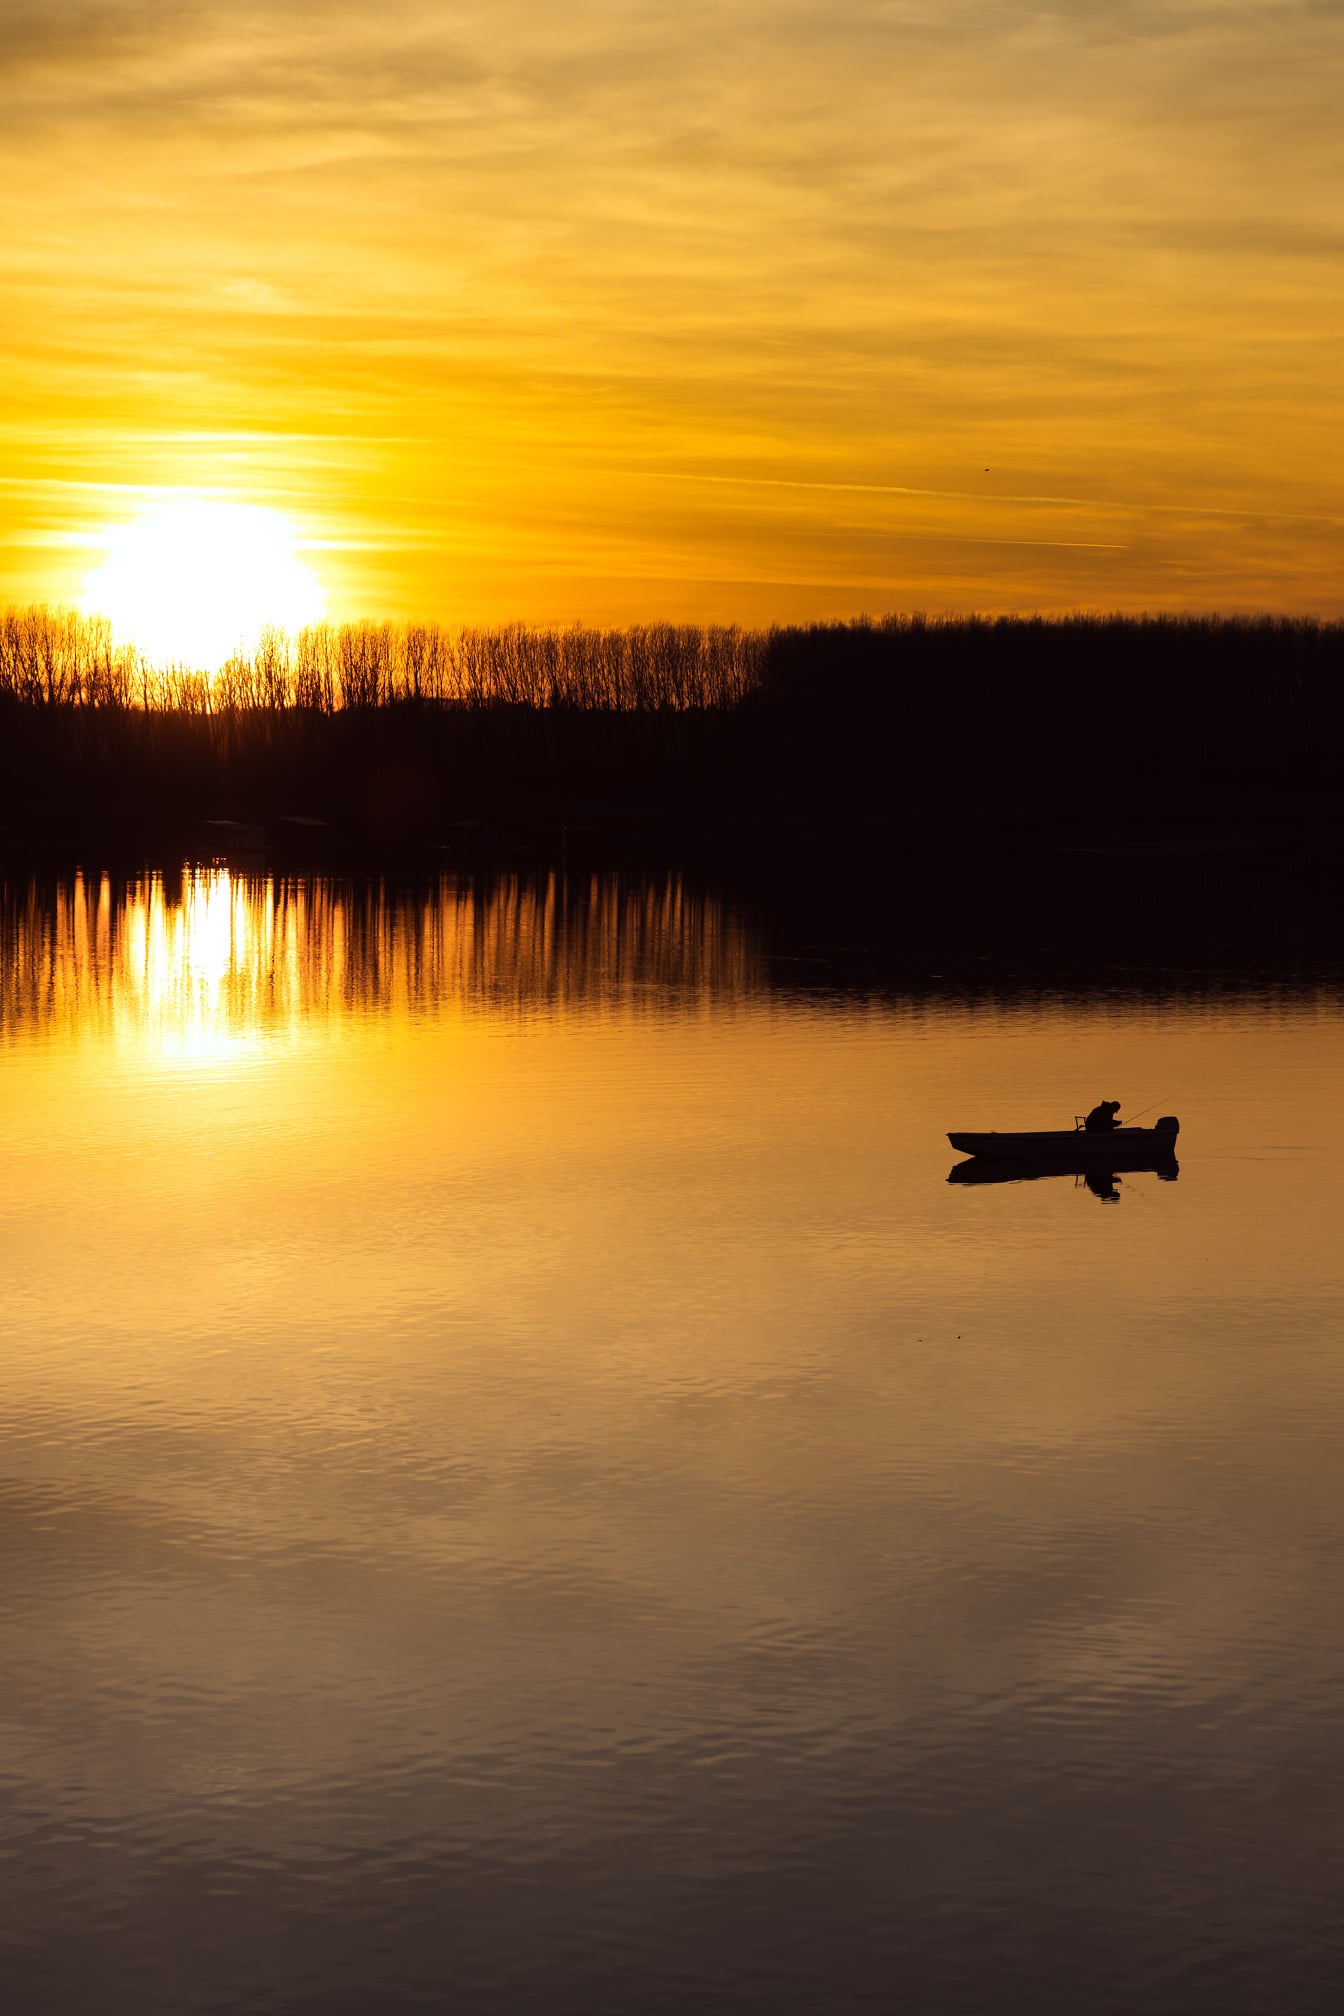 Matahari terbit cerah di tepi danau dengan siluet perahu nelayan